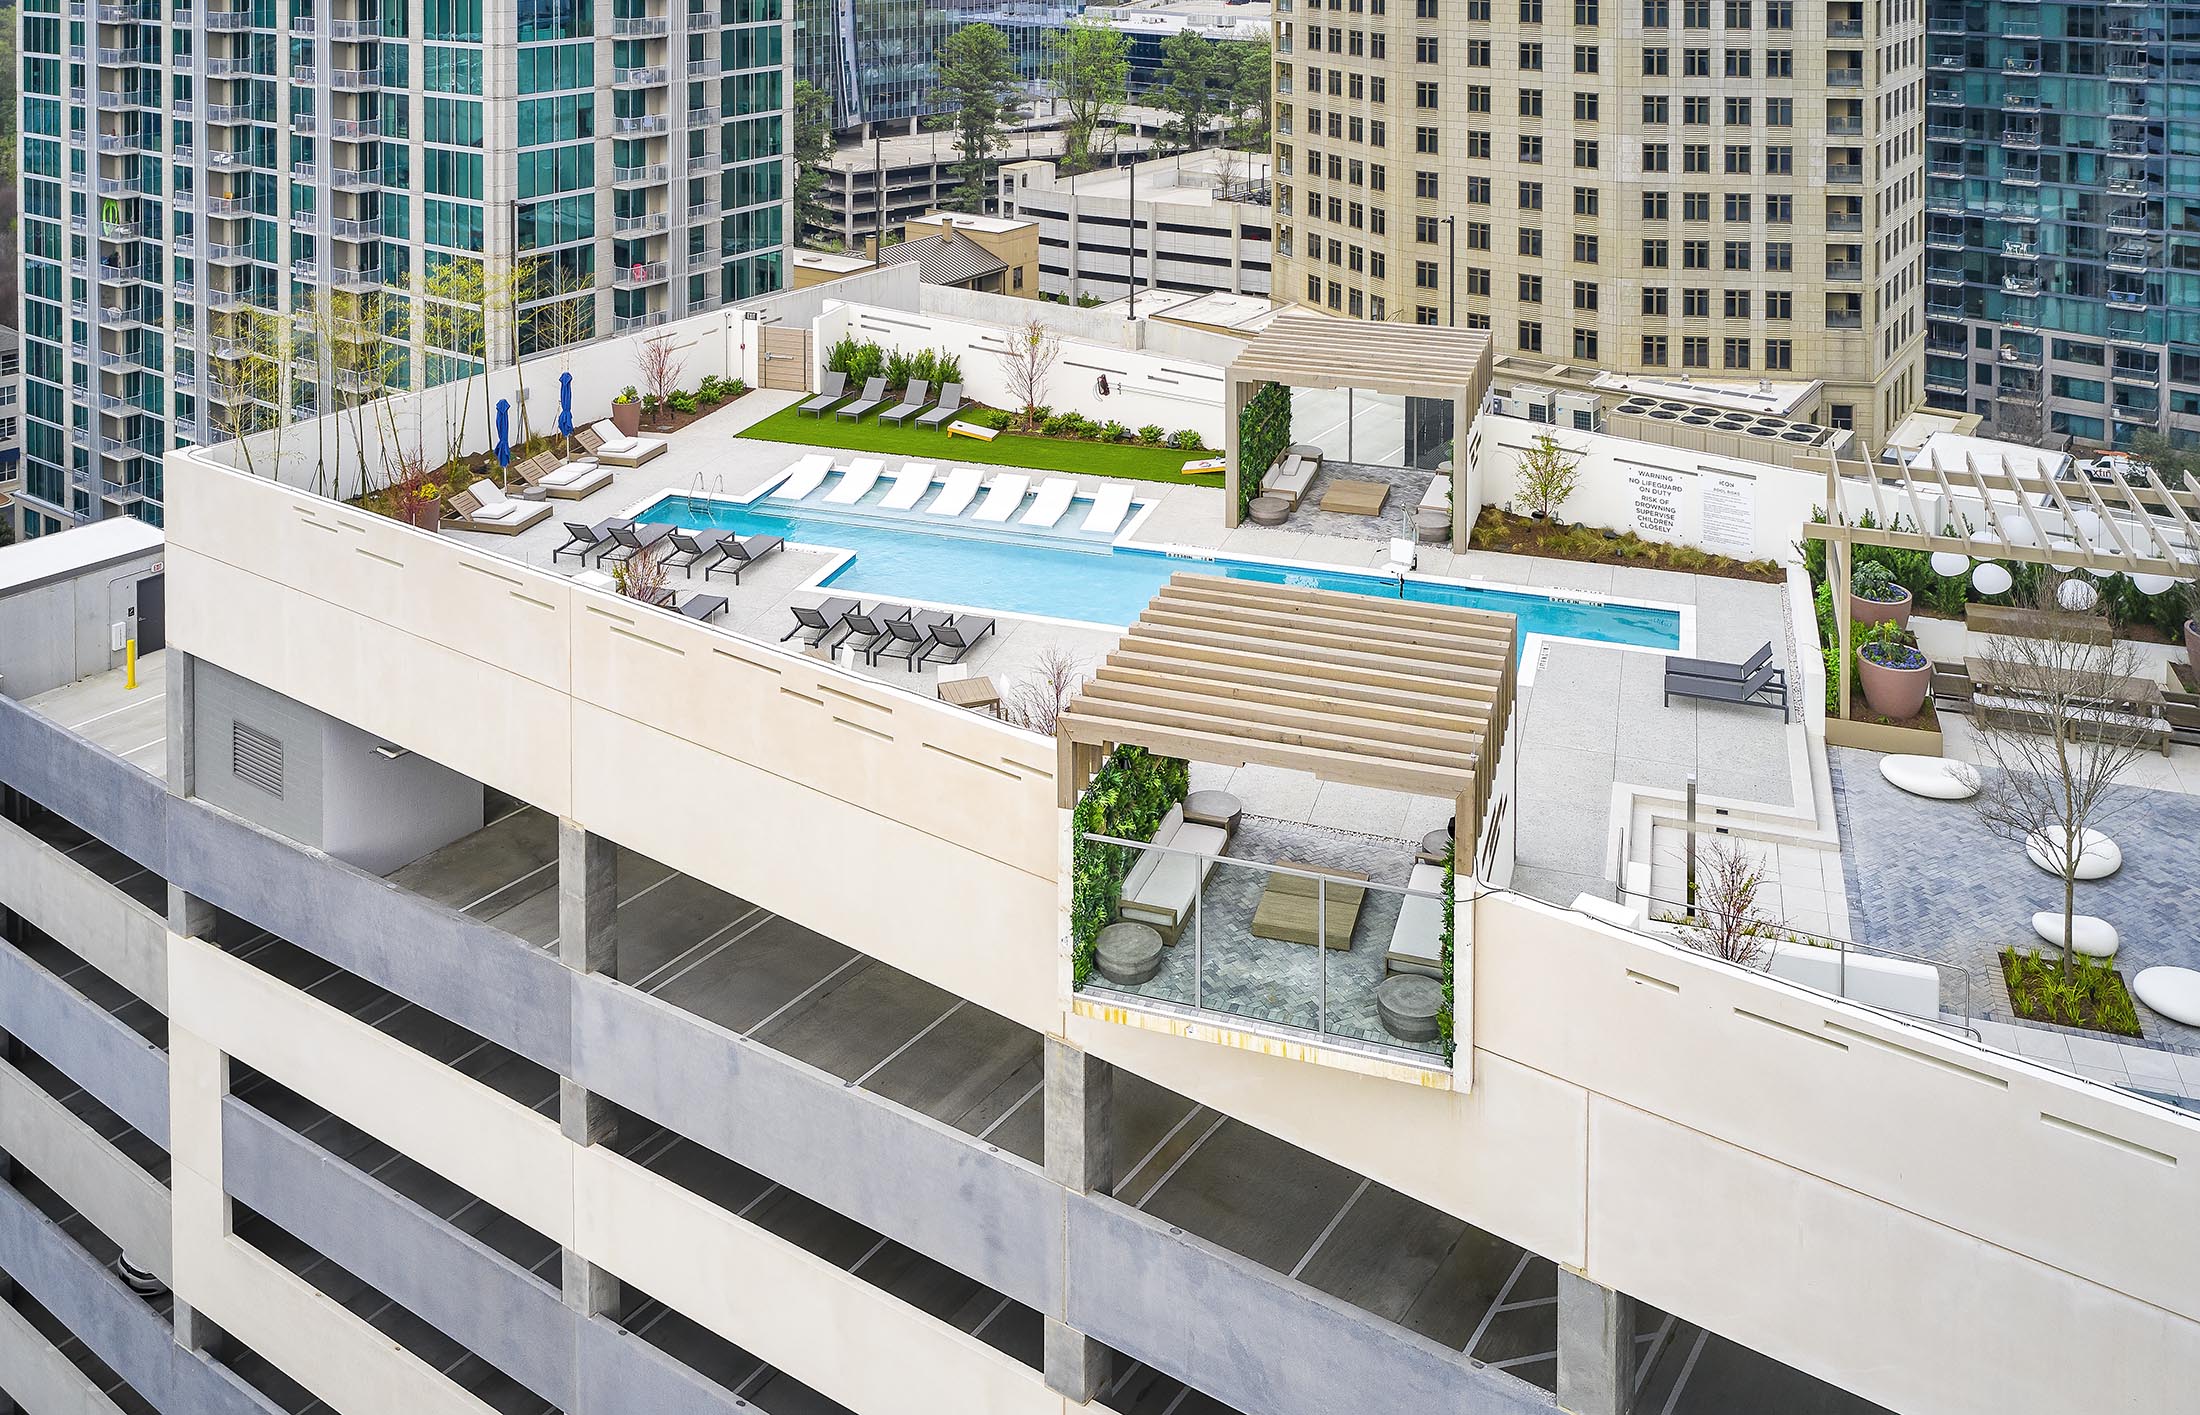 Luxury Pool in Atlanta Shot From Drone